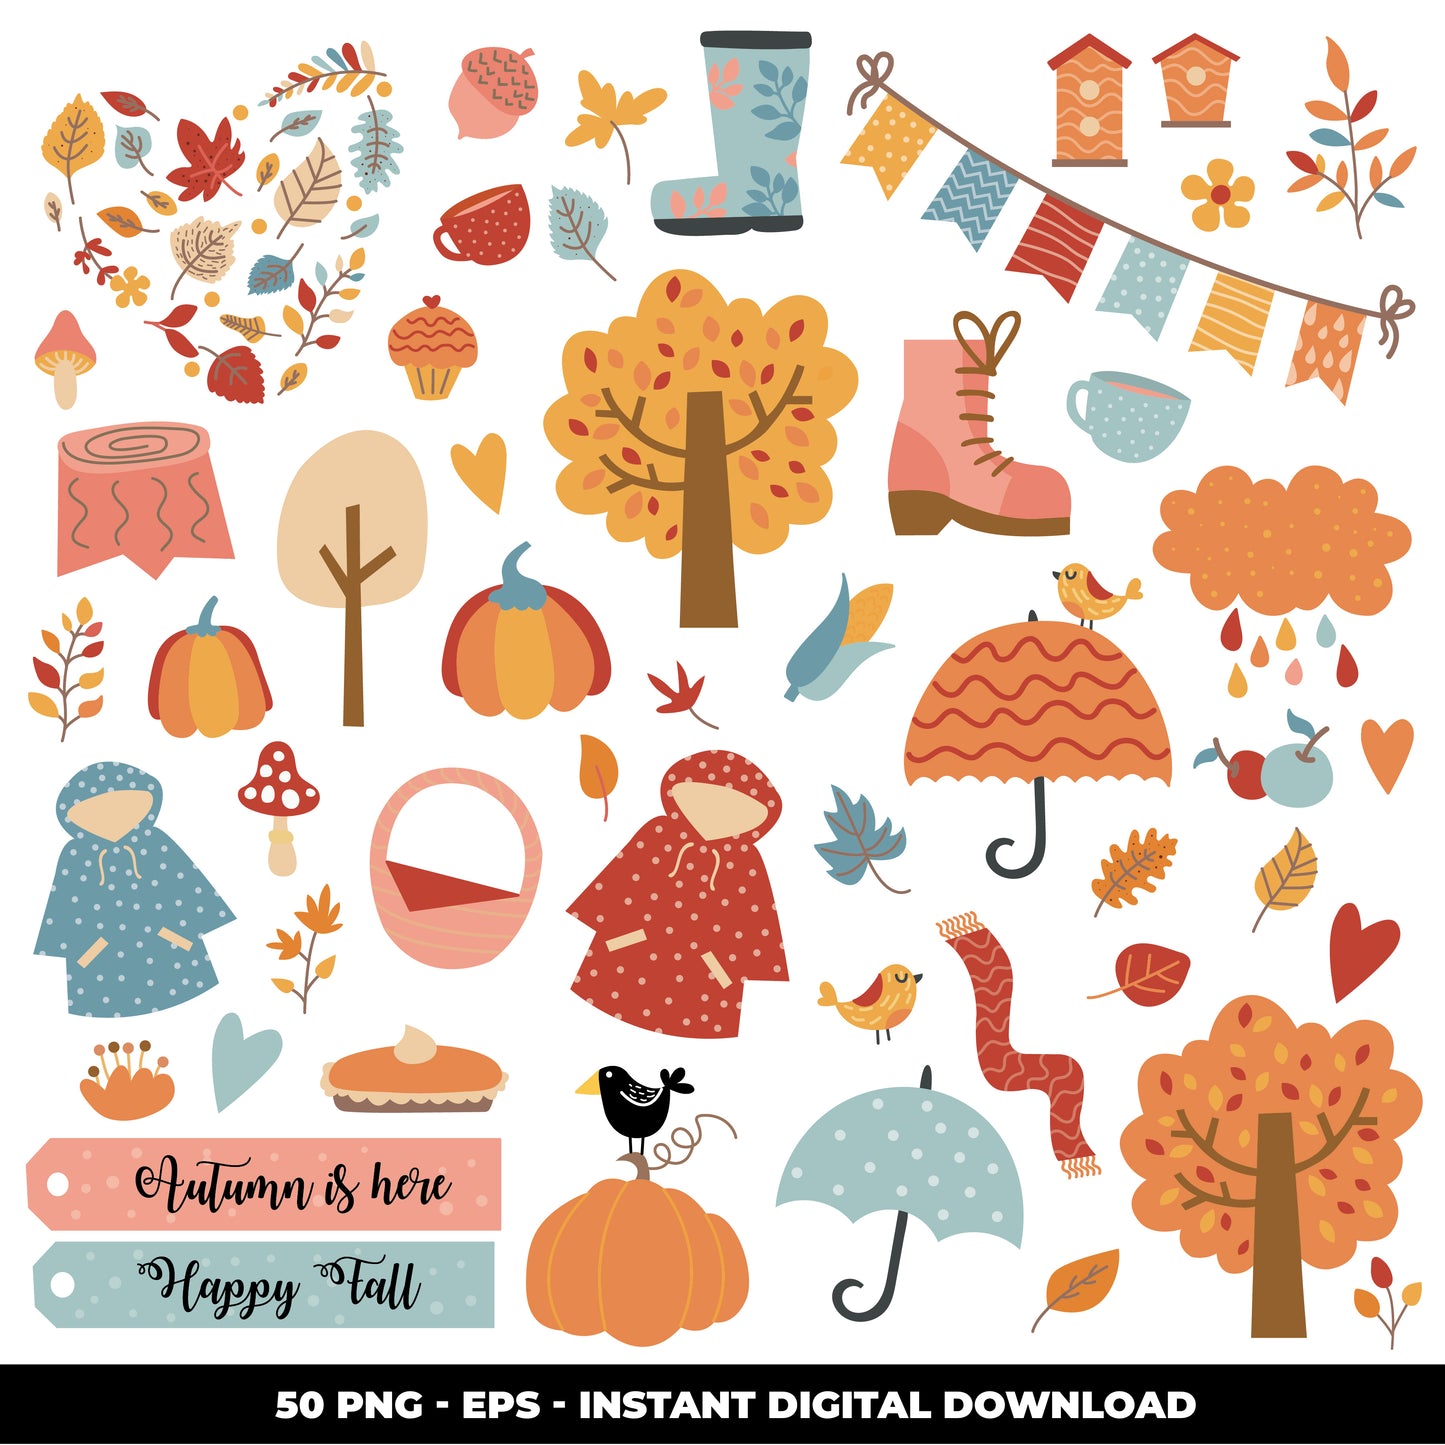 COD846 - Autumn clipart, fall clipart, Leaves clipart, Plants eps, Paper Leaves, Leaf Templates, Wreath